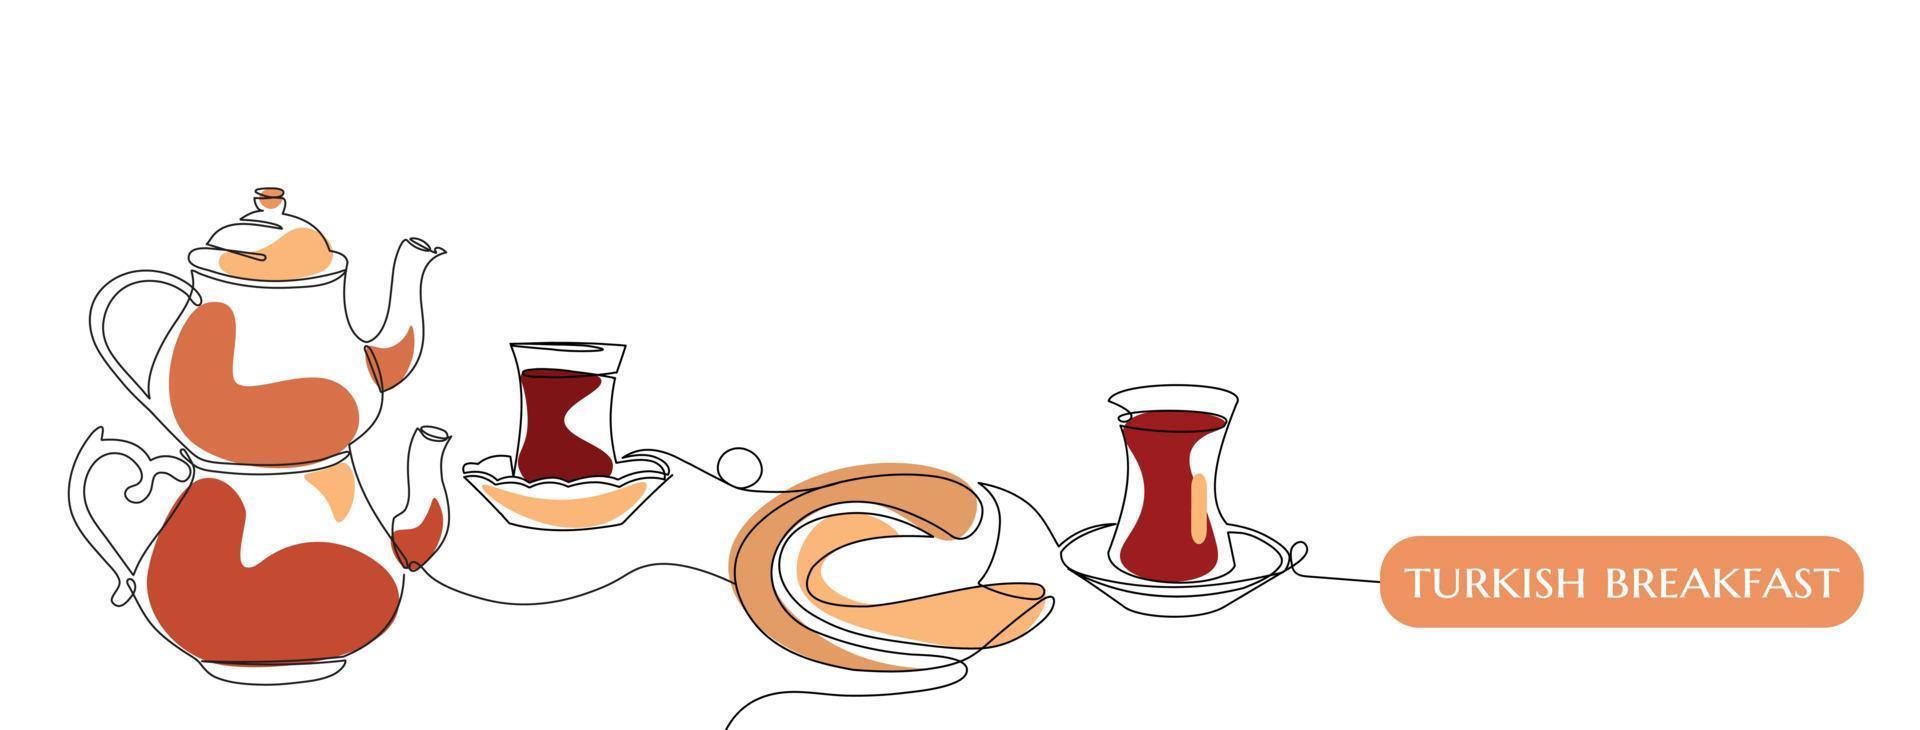 pequeno-almoço turco tradicional. chá e simit ou bagel turco. vetor abstrato uma arte contínua linear com estilo turco de texto. elementos isolados para banner, logotipo ou mídia social.